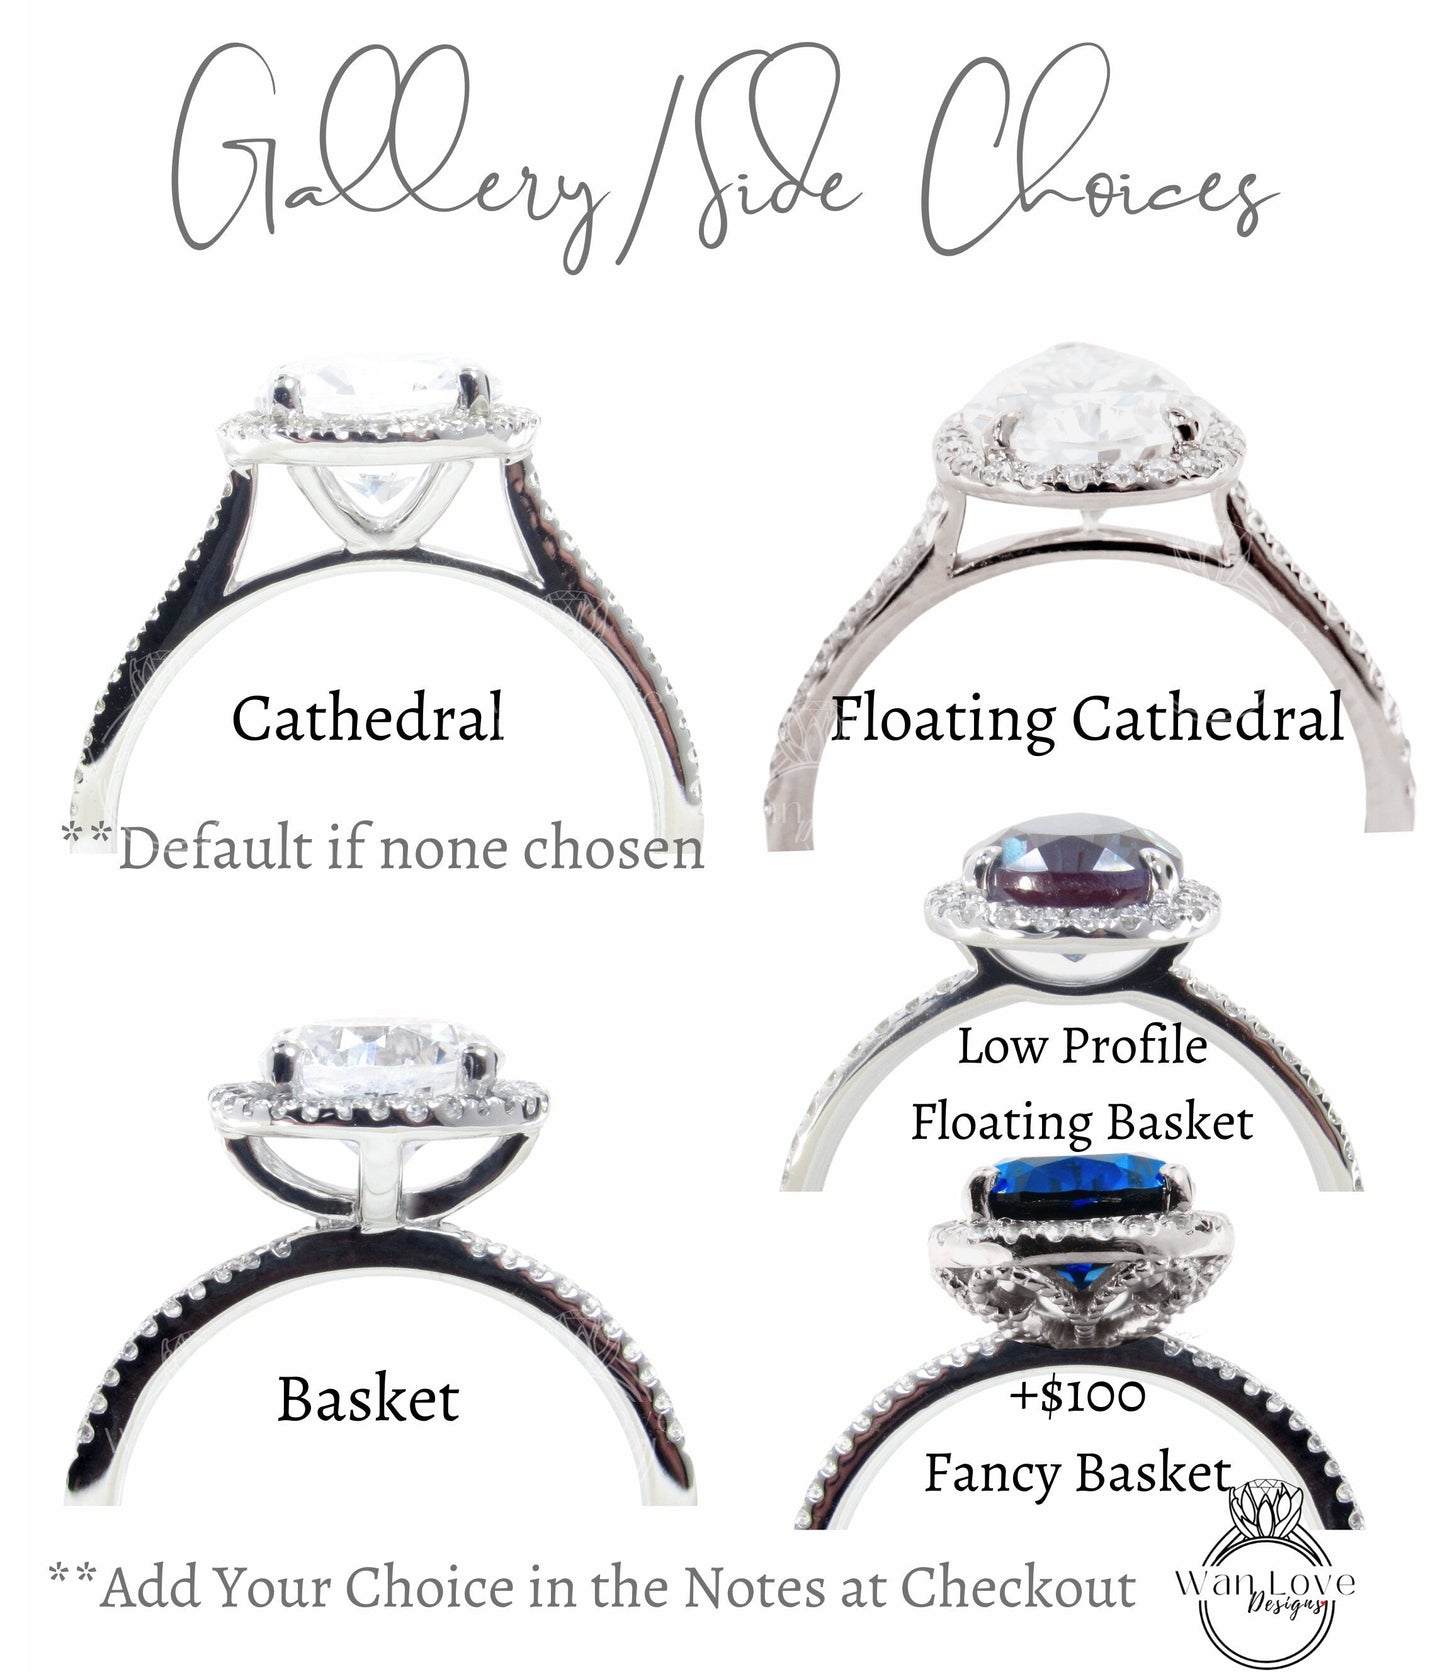 Oval cut Labradorite engagement ring art deco ring halo moissanite/diamond ring vintage rose gold half eternity anniversary bridal ring Wan Love Designs